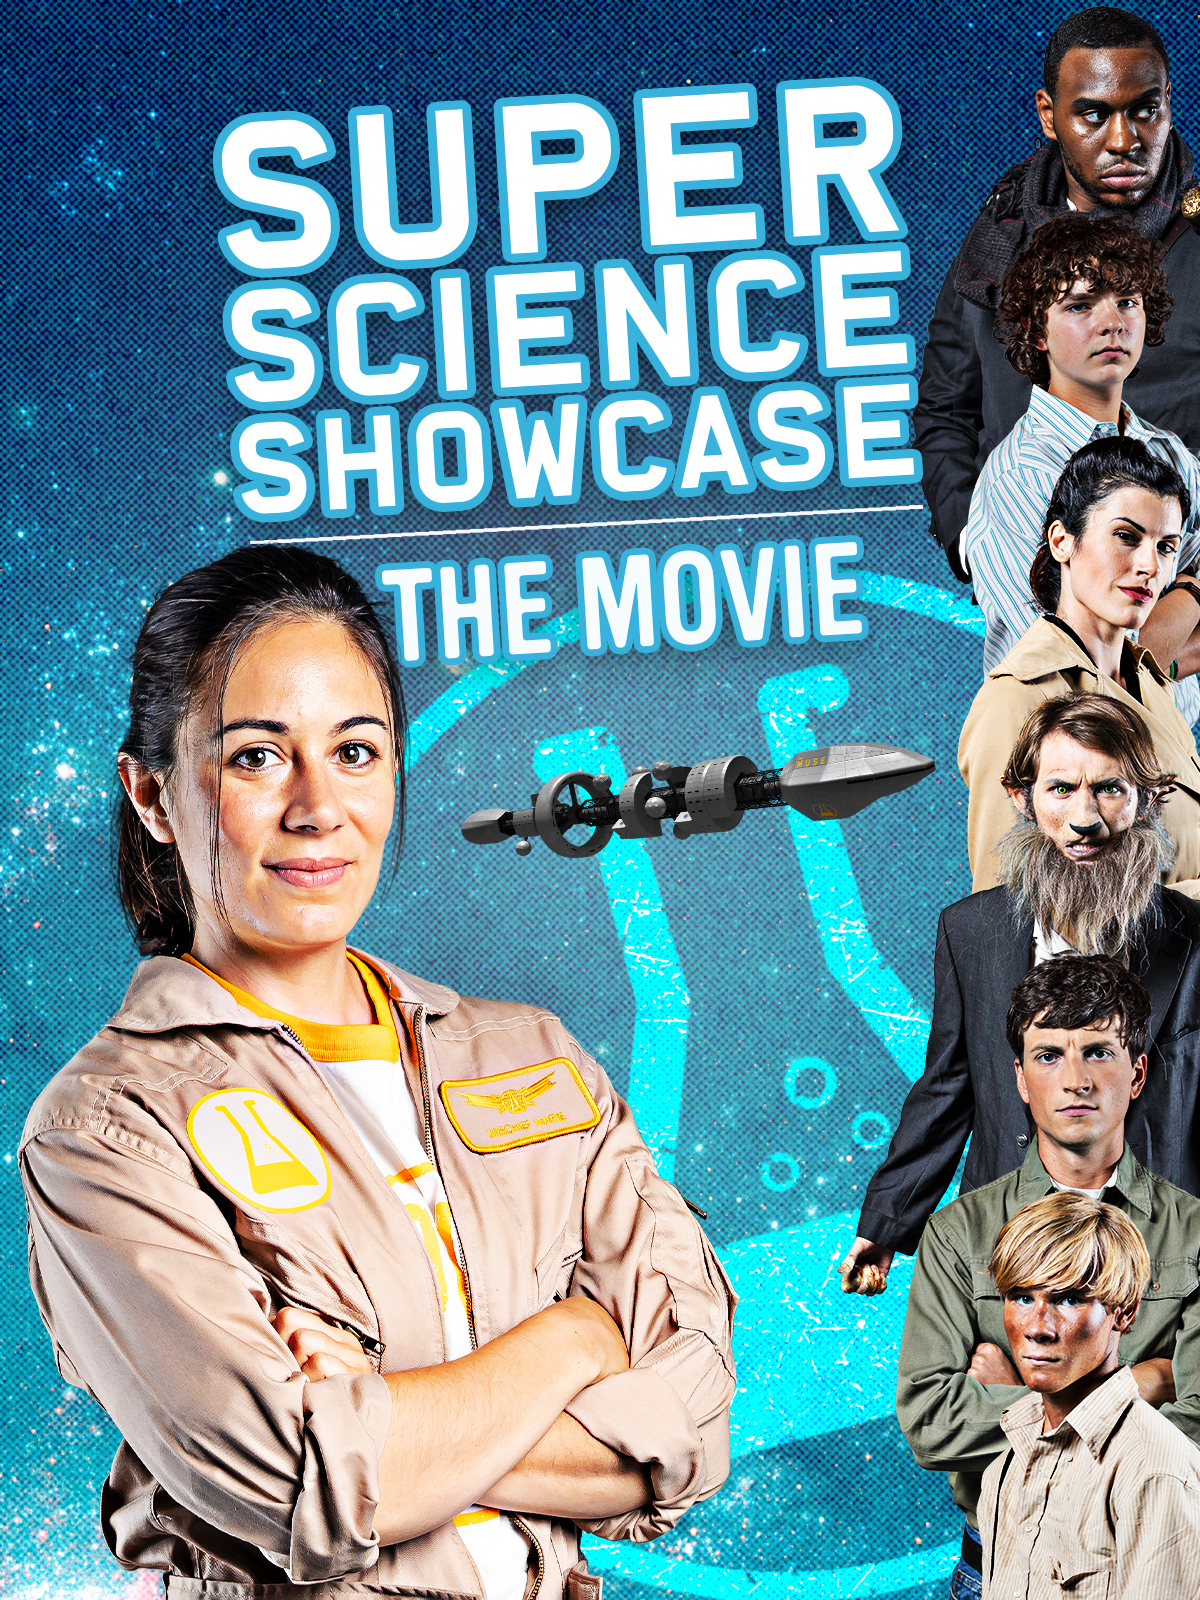 "Super Science Showcase"